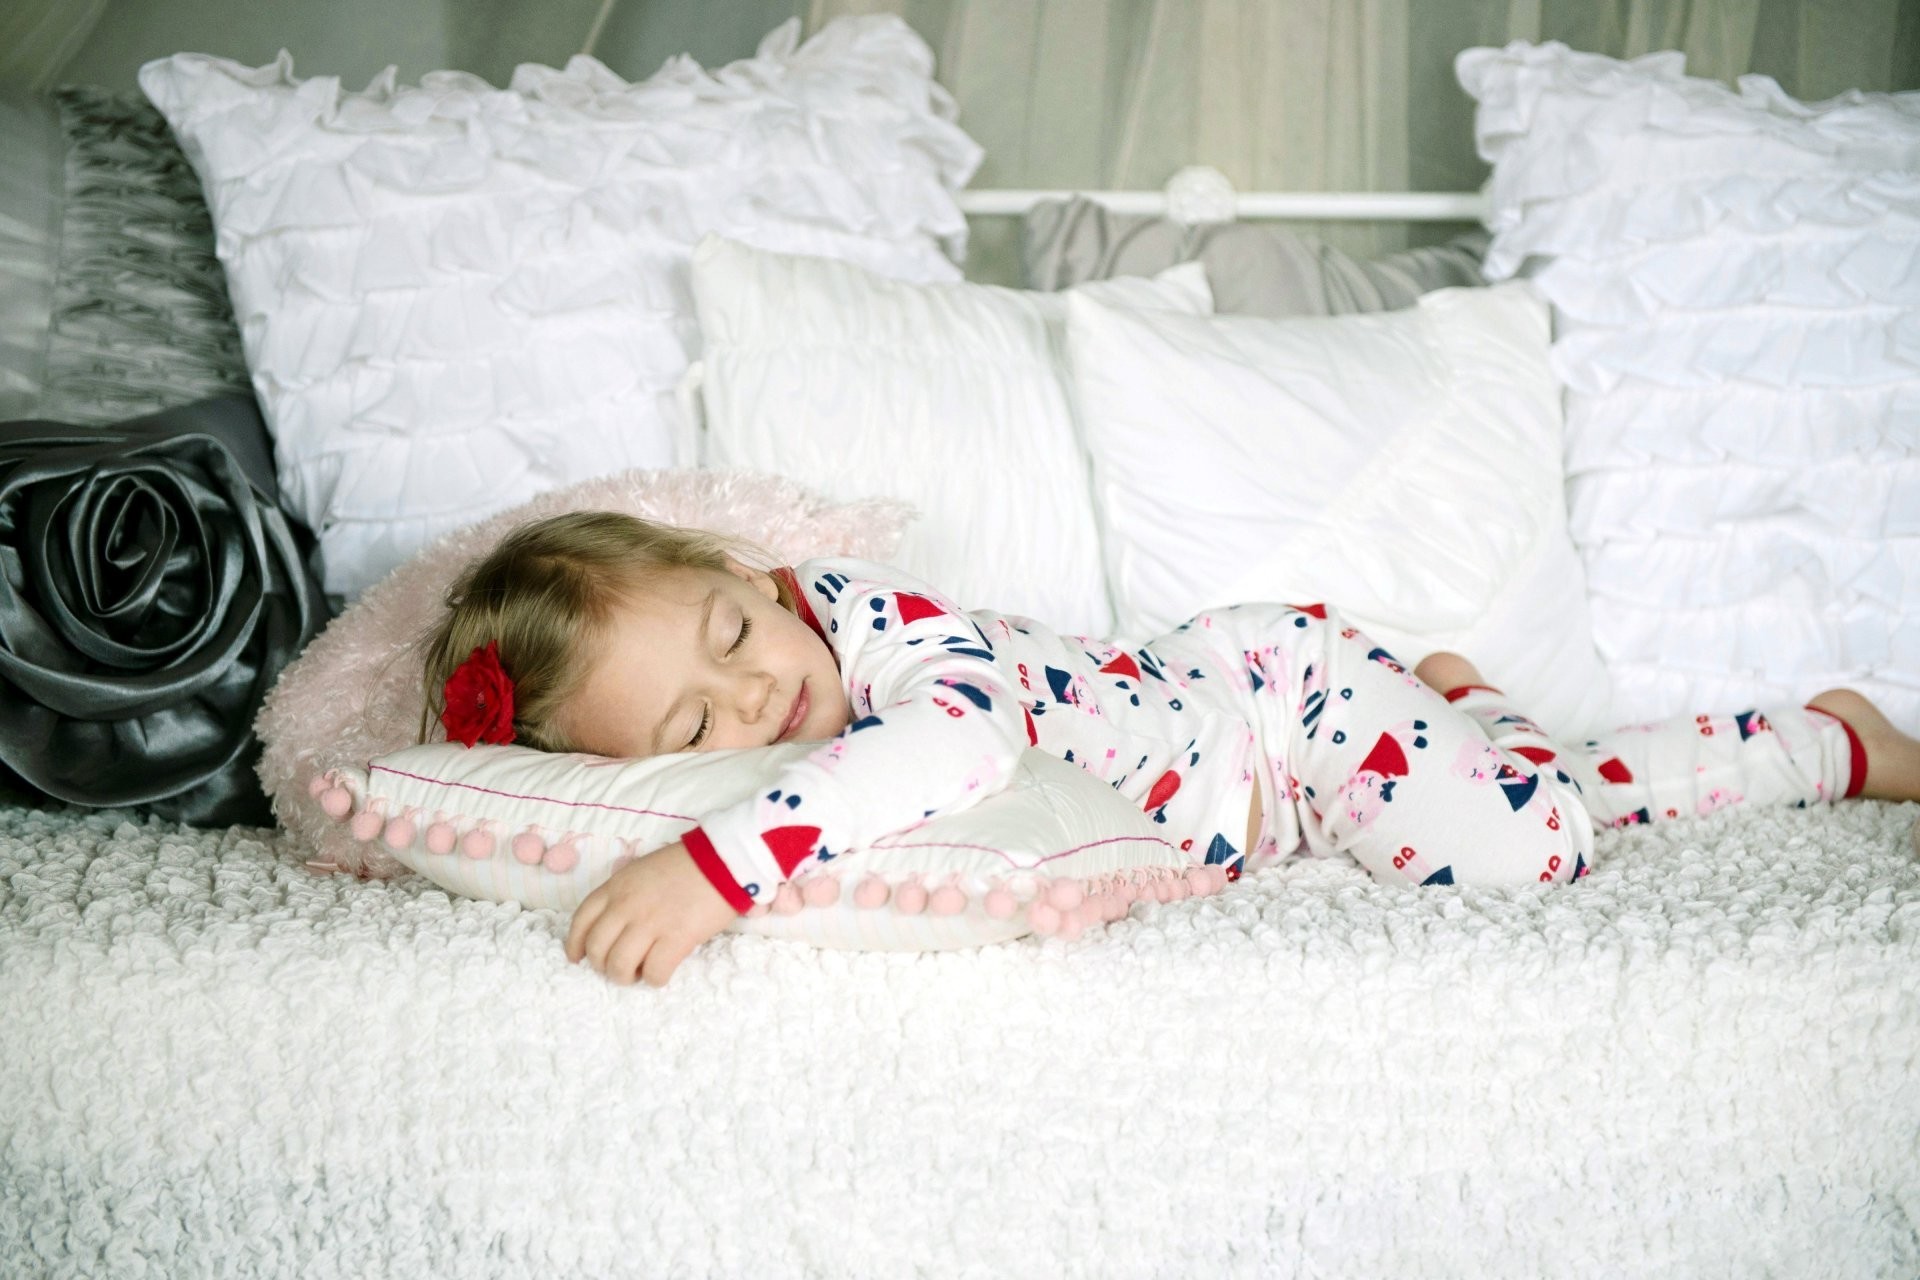 1920x1280 mood children kids girl sleeping sleeping sports relaxation bed pillow  rosette background girl child background wallpaper